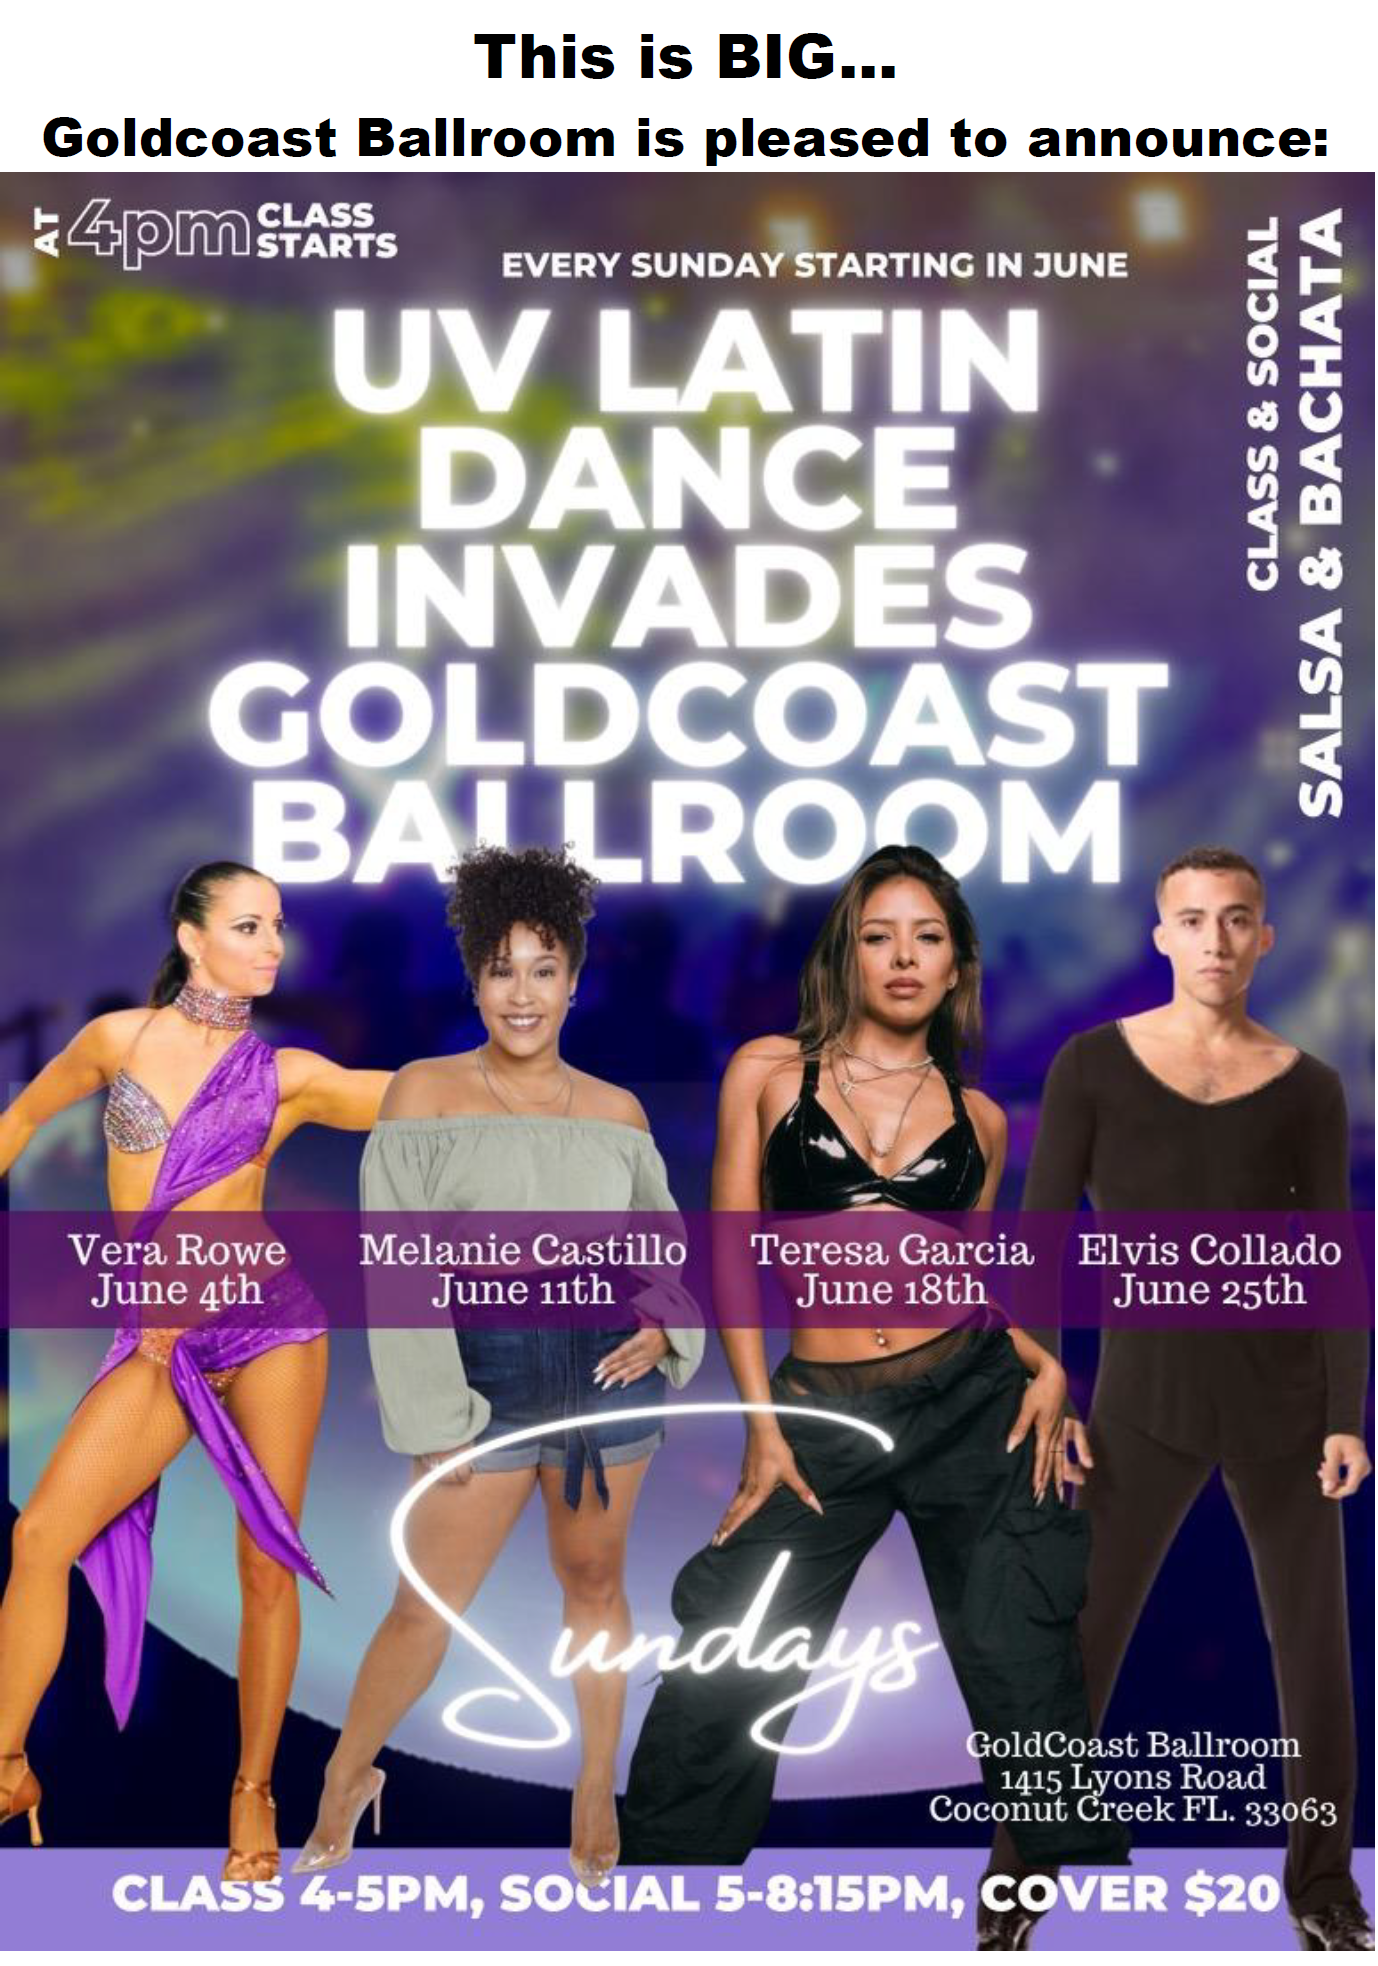 New! - Salsa & Bachata Classes Every Sunday 4-5 at Goldcoast Ballroom - Taught by UV Latin Dance Instructors